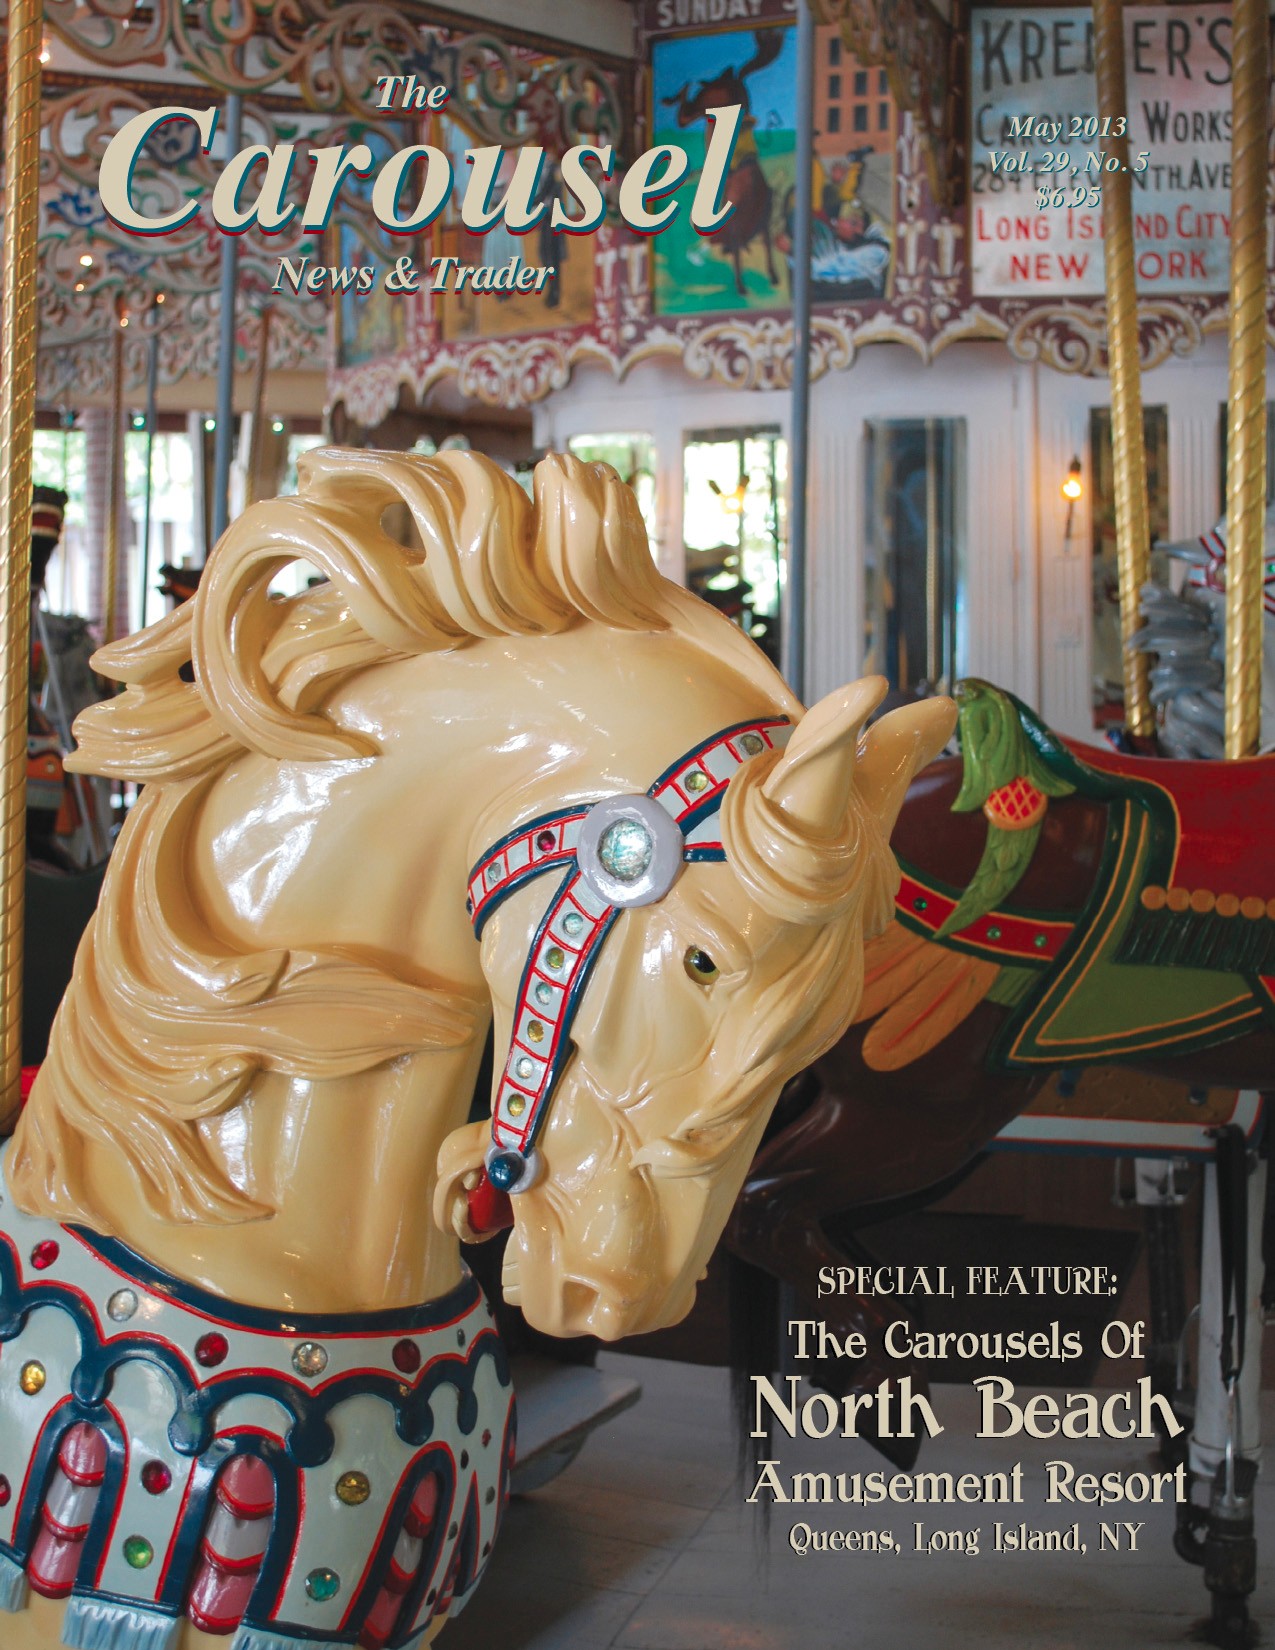 Carousel-news-cover-5-History-North-Beach-NY-carousels-May-2013